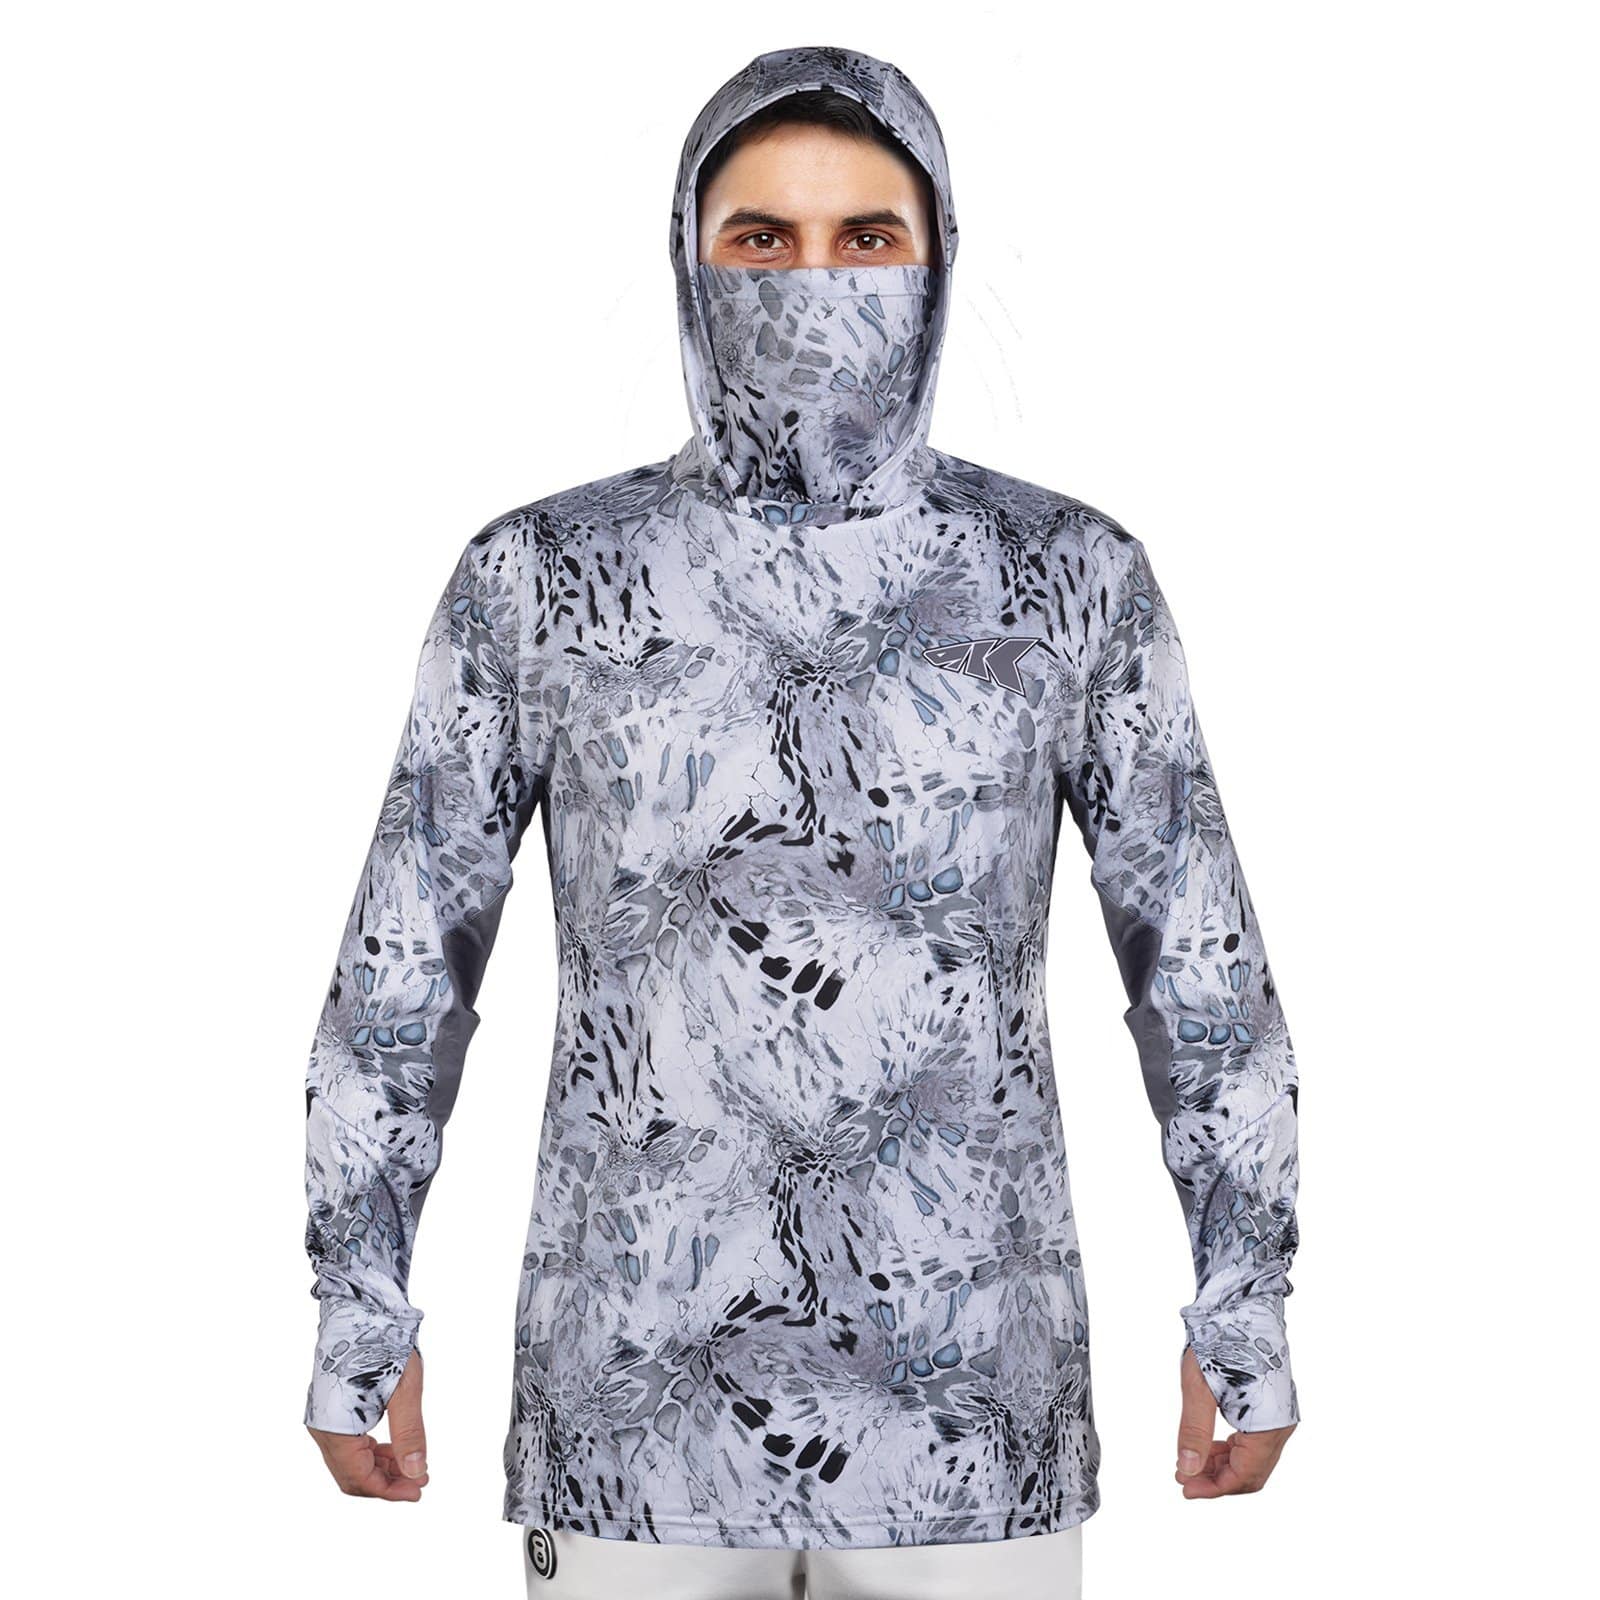 KastKing Men's Hoodie Shirt UPF 50 Sun Protection Long Sleeve